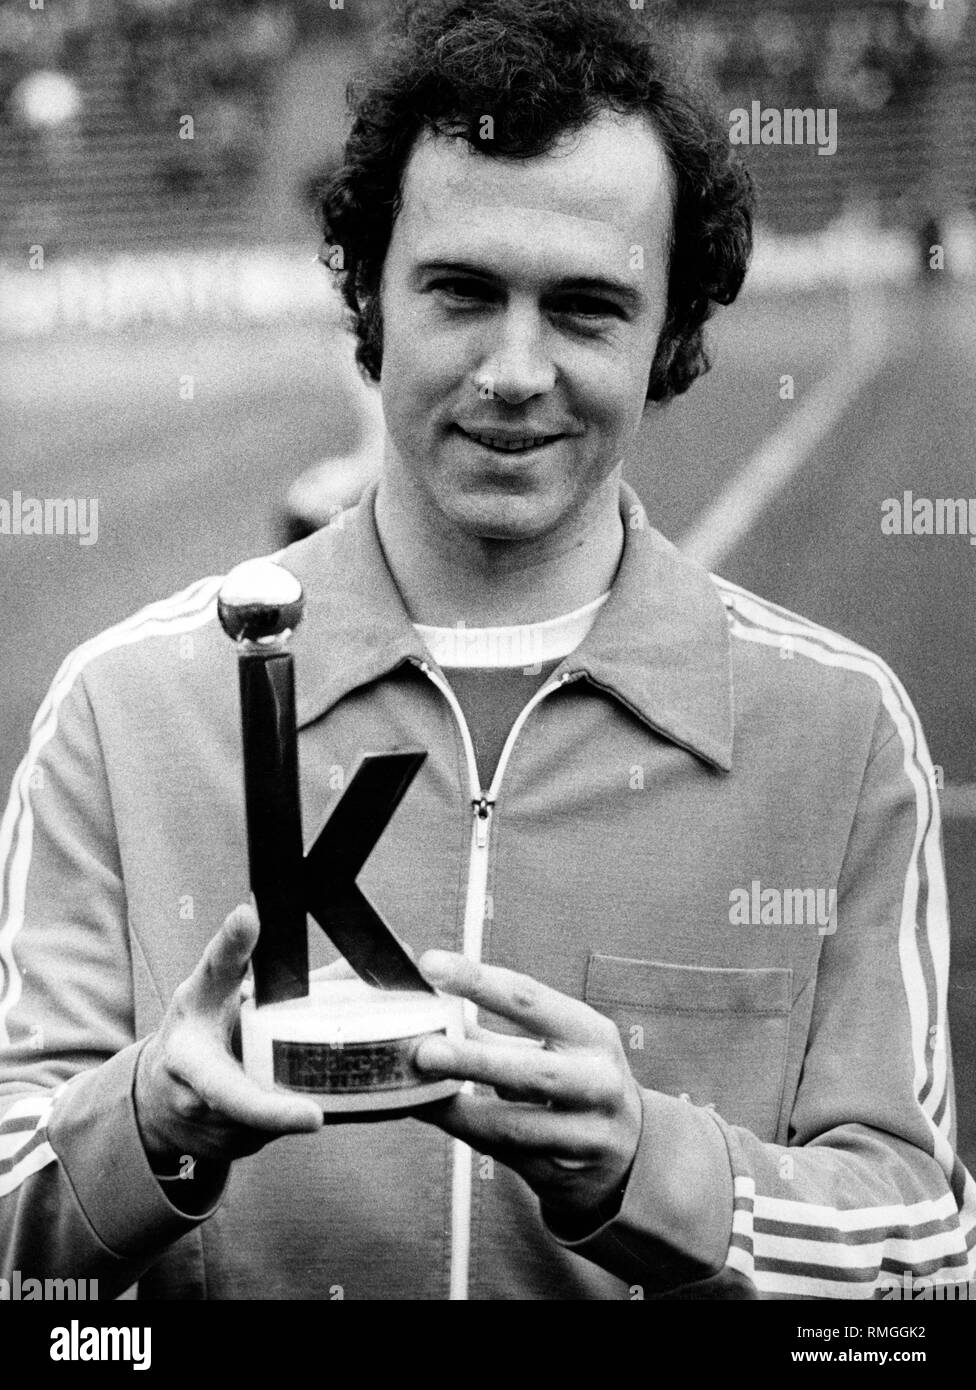 Franz Beckenbauer with the Kicker award. Stock Photo